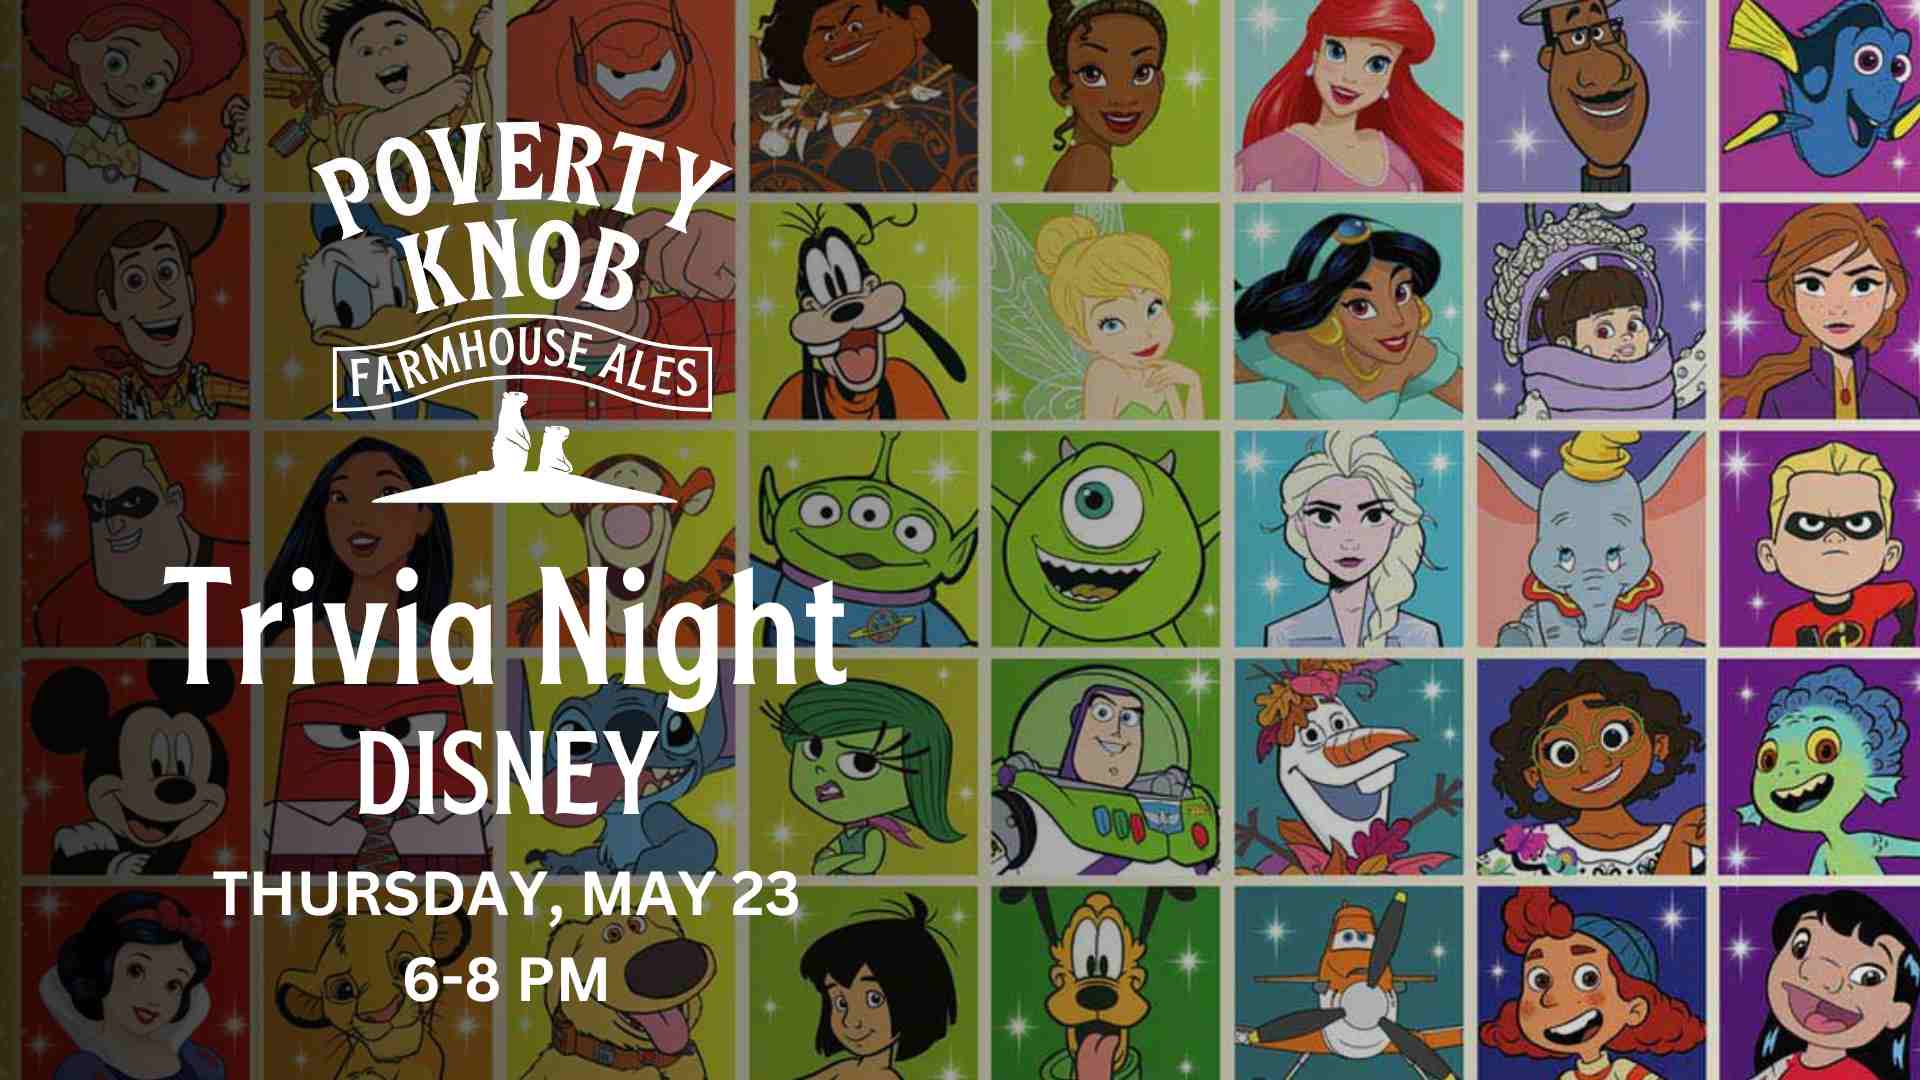 FREE Trivia Night at Poverty Knob: Disney